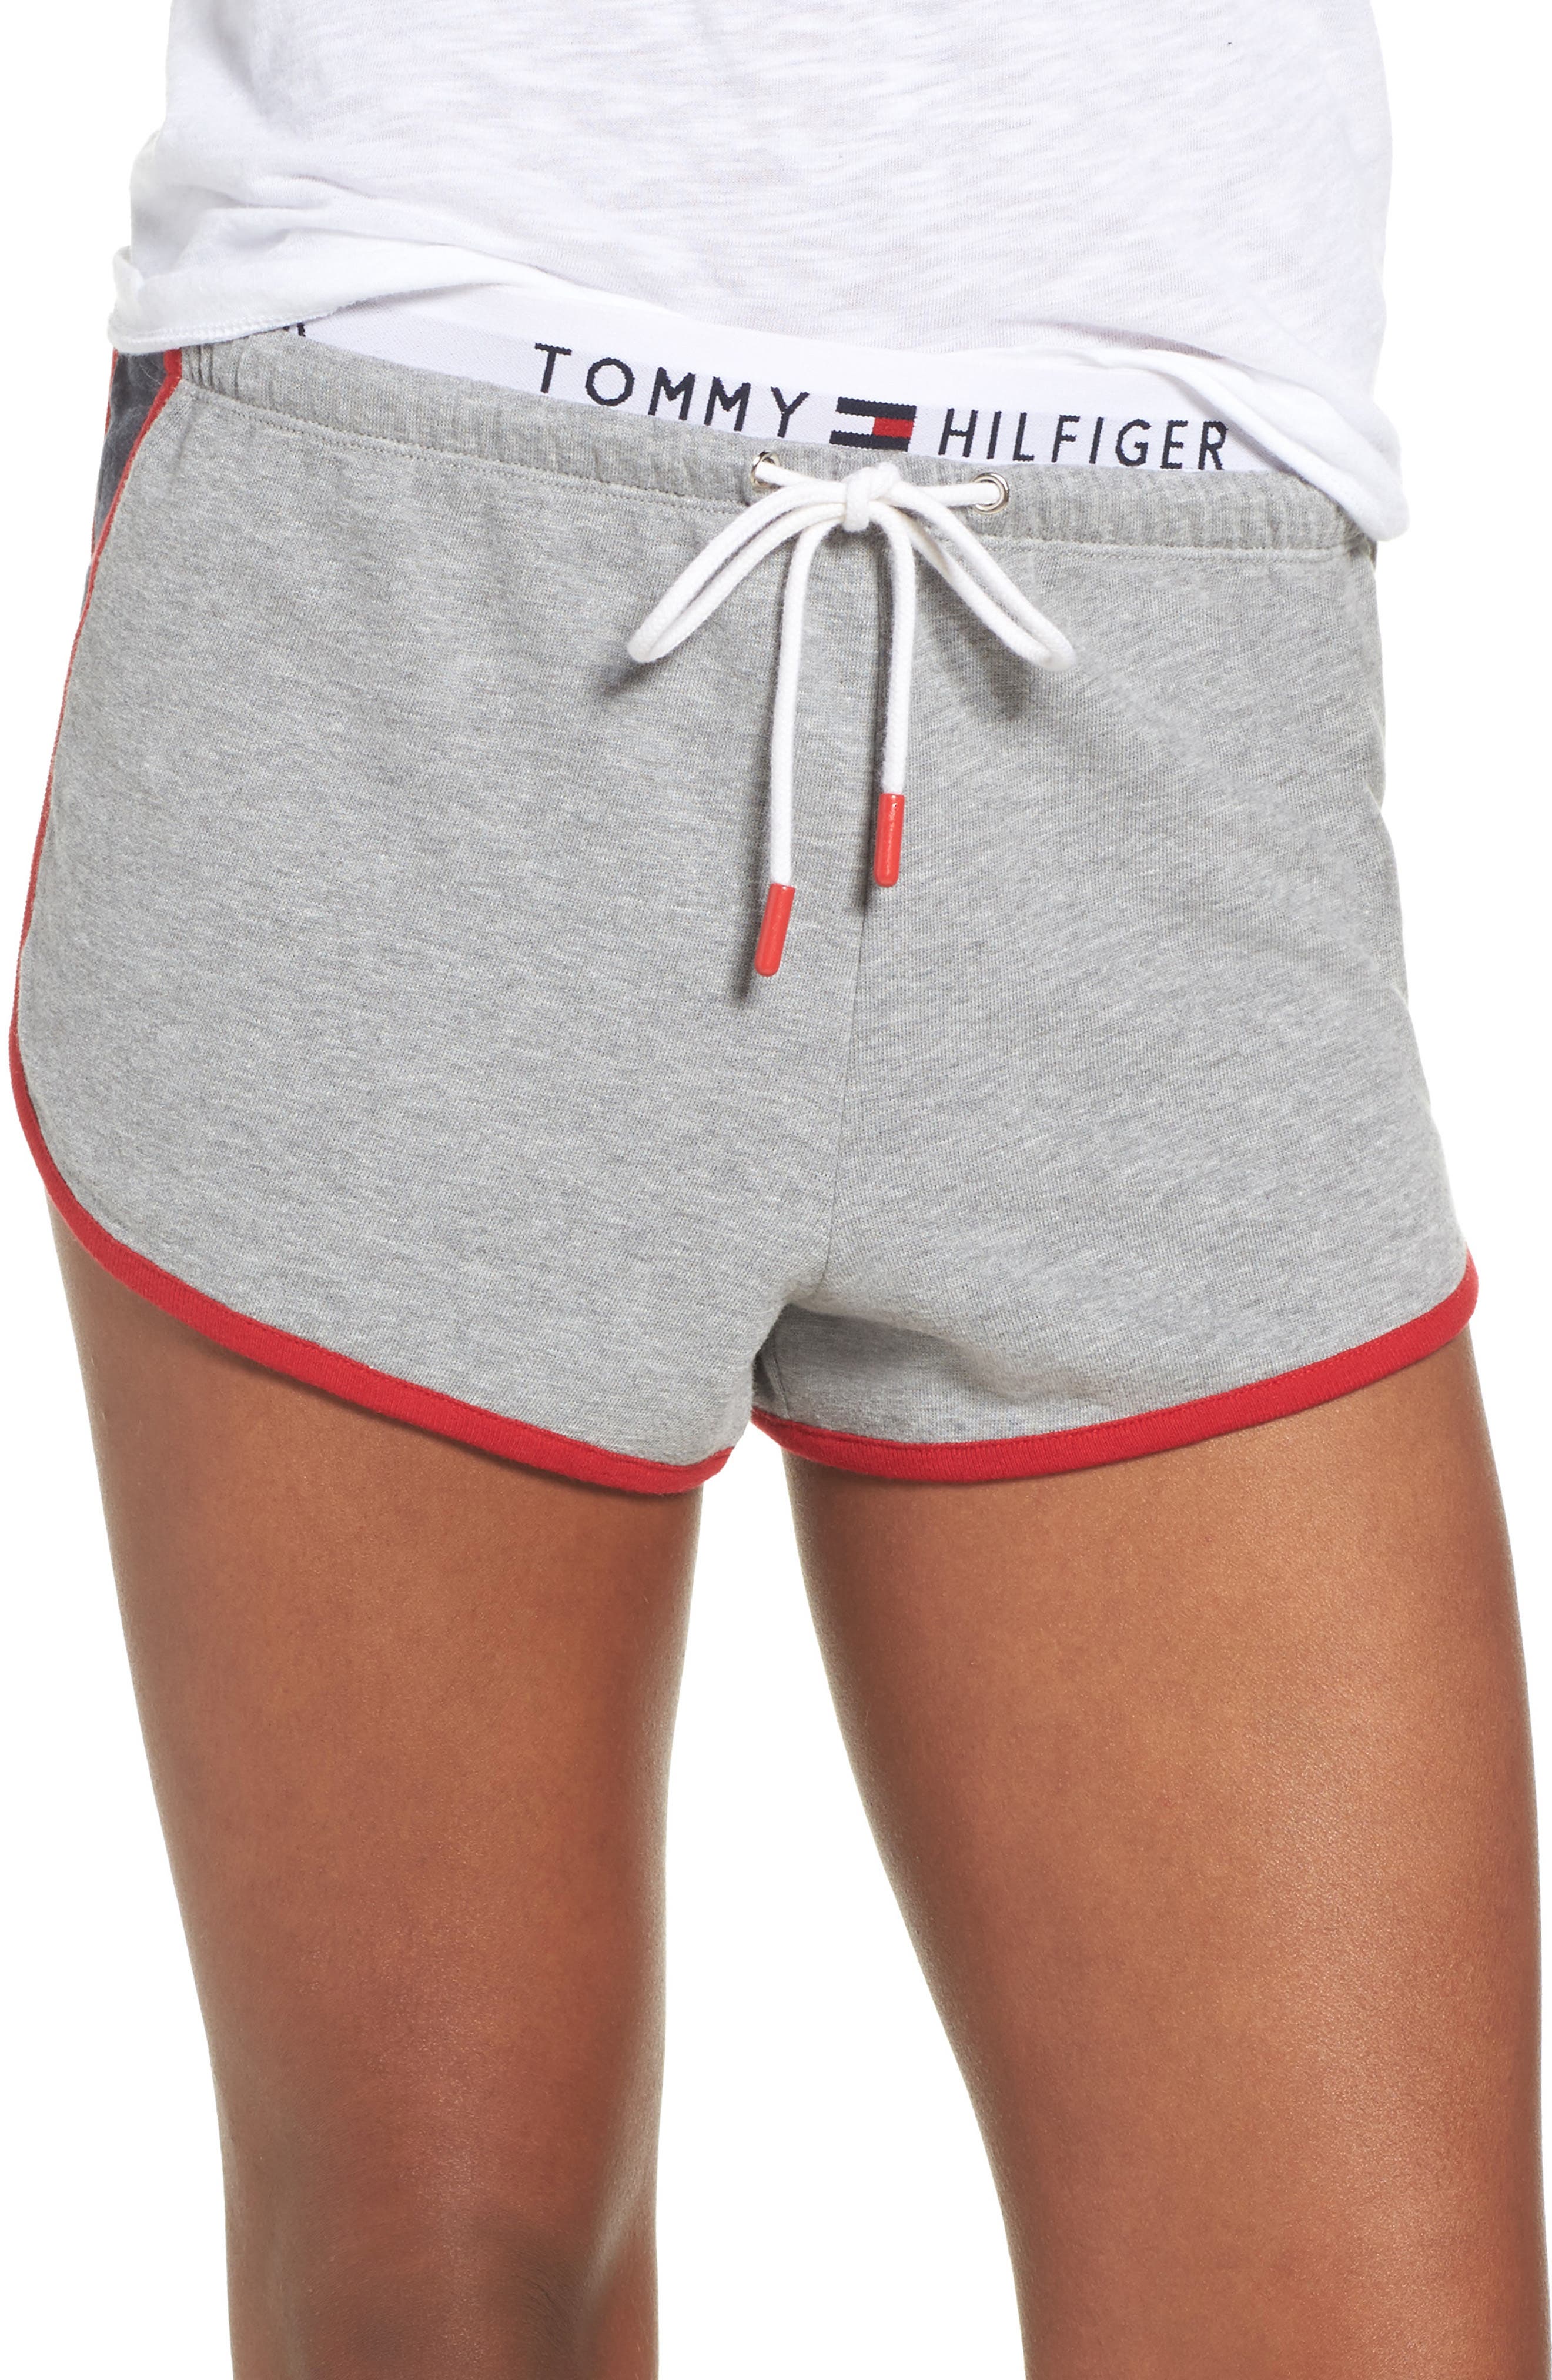 tommy hilfiger shorts women